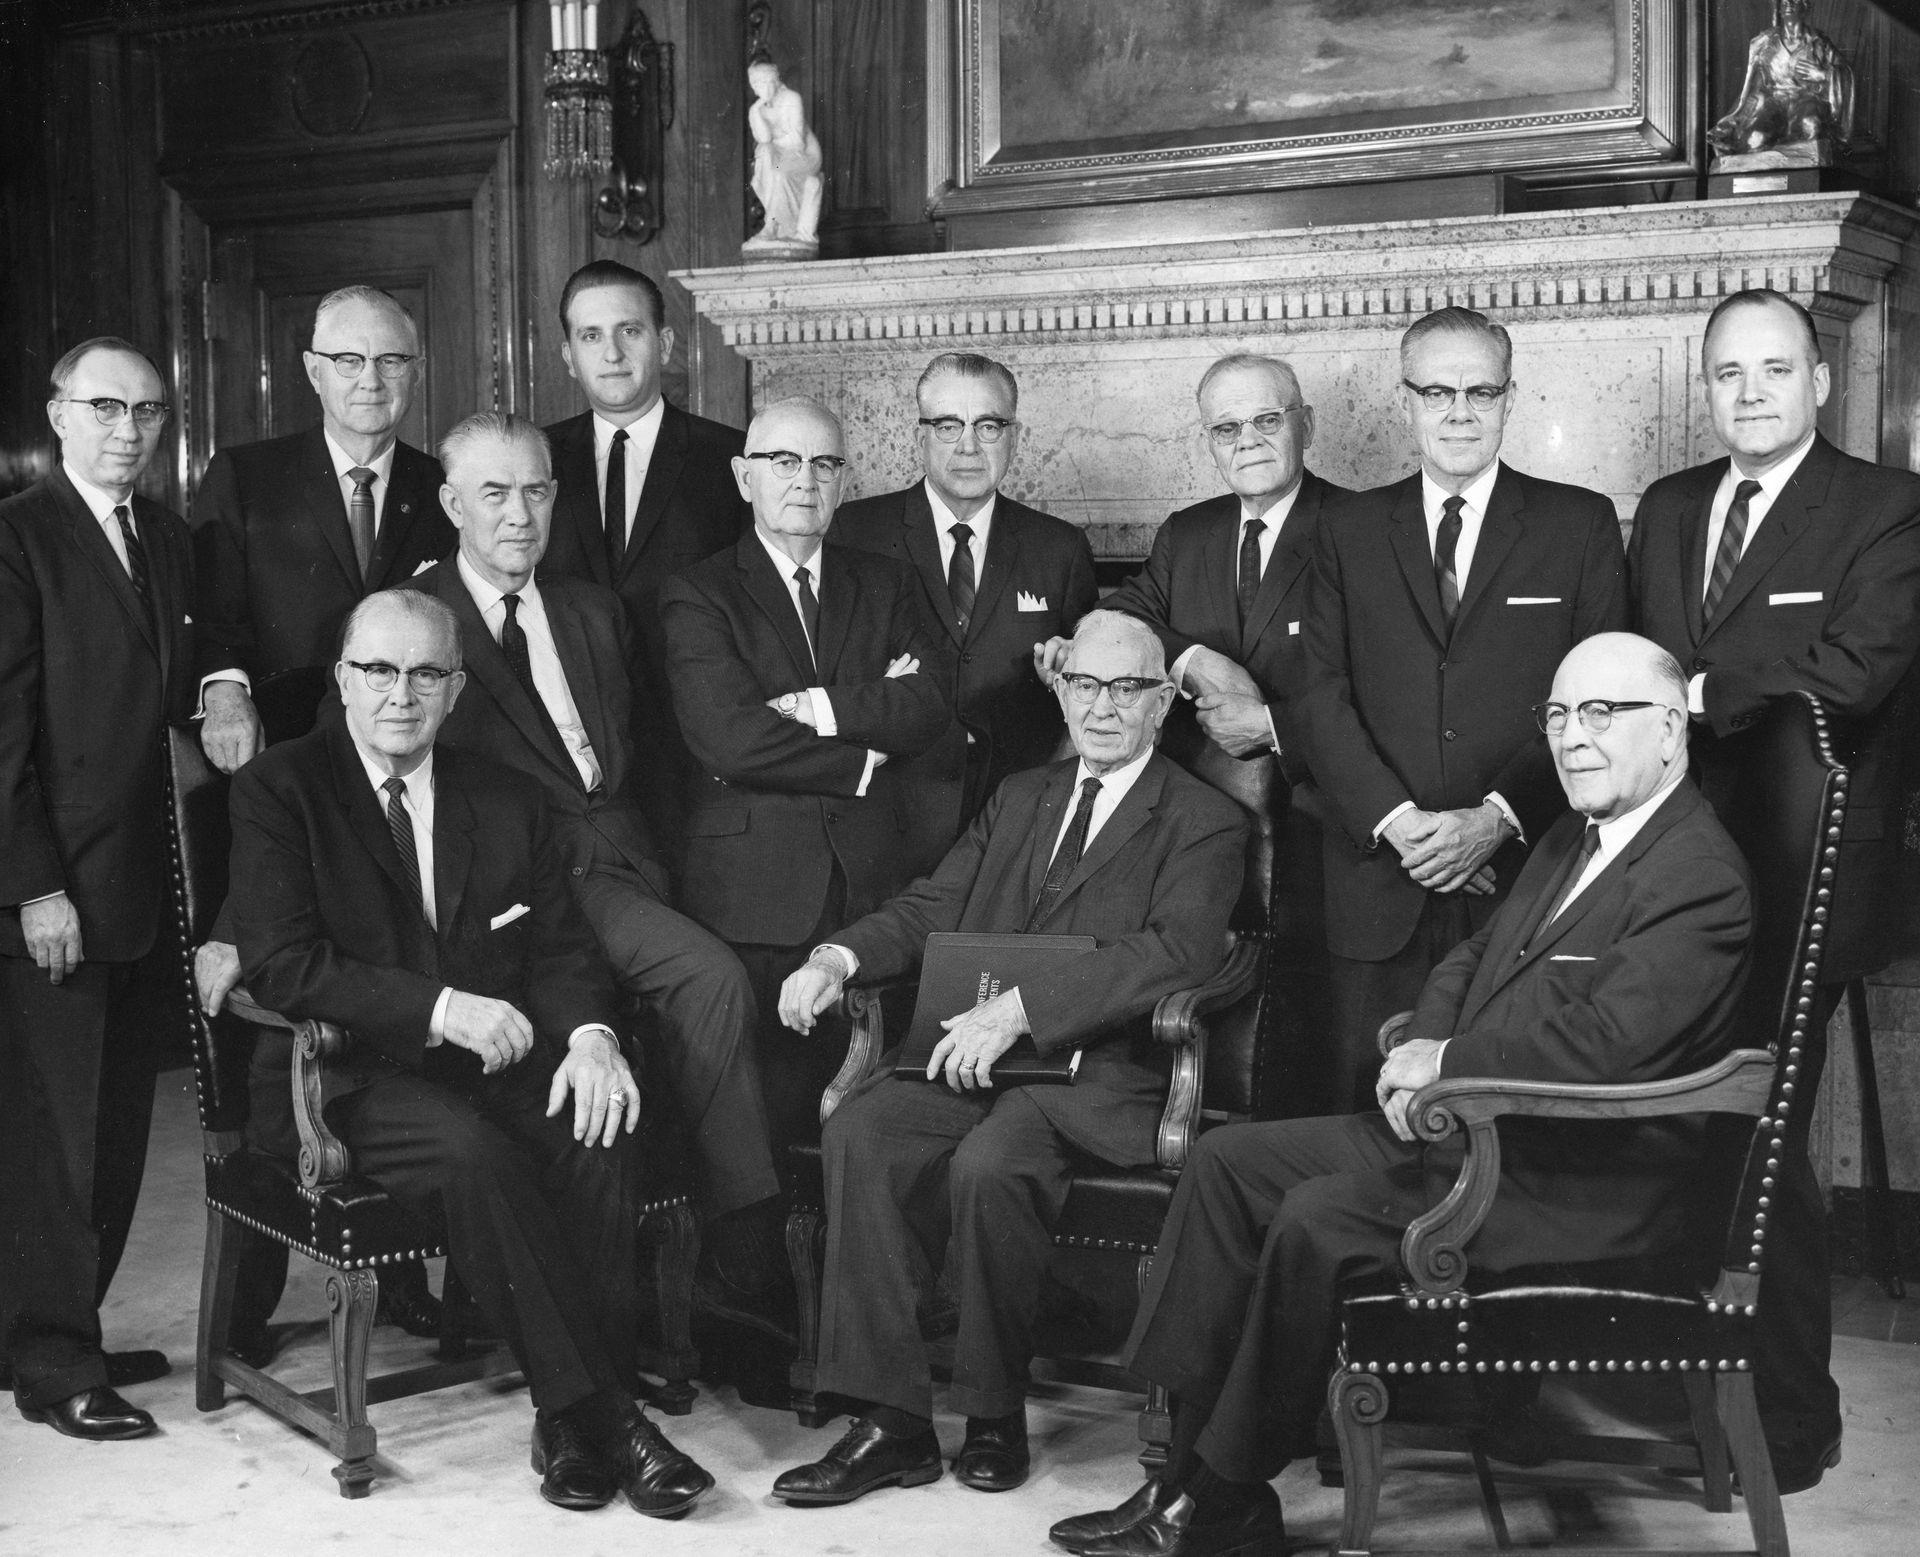 The Quorum of the Twelve Apostles in 1965. Seated left to right: Ezra Taft Benson, Mark E. Petersen, Joseph Fielding Smith, LeGrand Richards. Standing left to right: Gordon B. Hinckley, Delbert L. Stapley, Thomas S. Monson, Spencer W. Kimball, Harold B. Lee, Marion G. Romney, Richard L. Evans, and Howard W. Hunter.